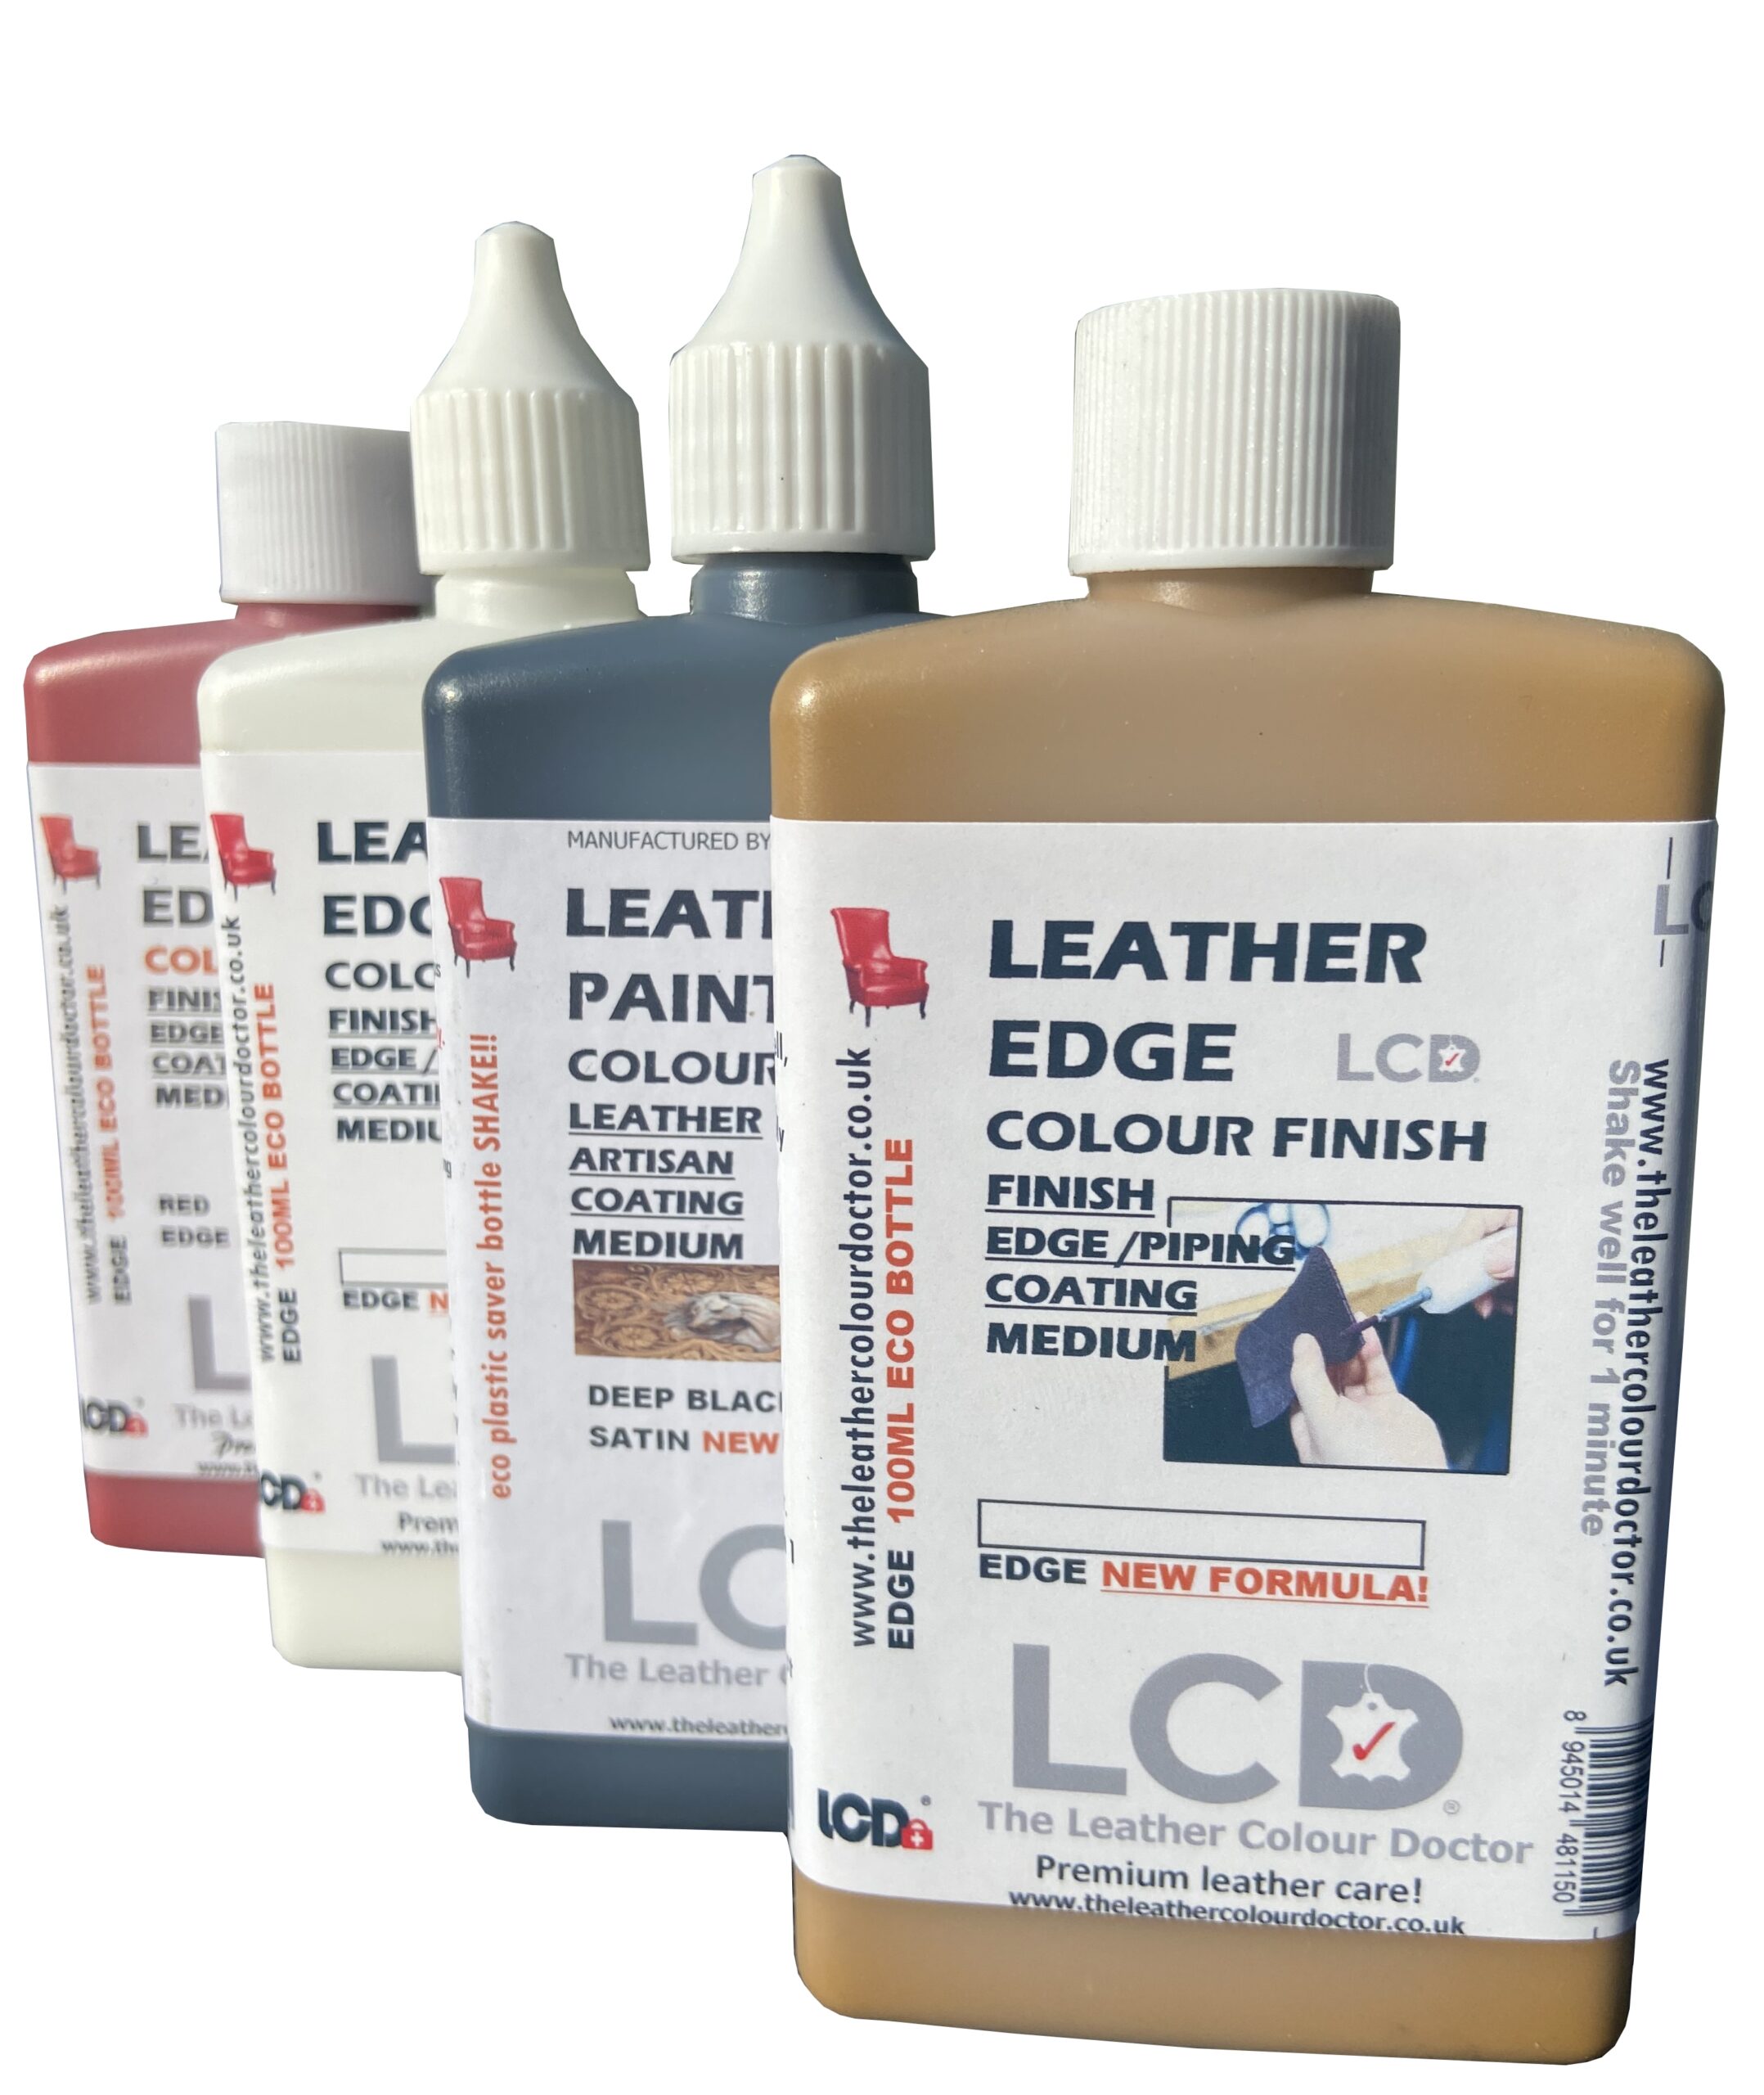 Leather edge paint tough durable flexible finish. - The Leather